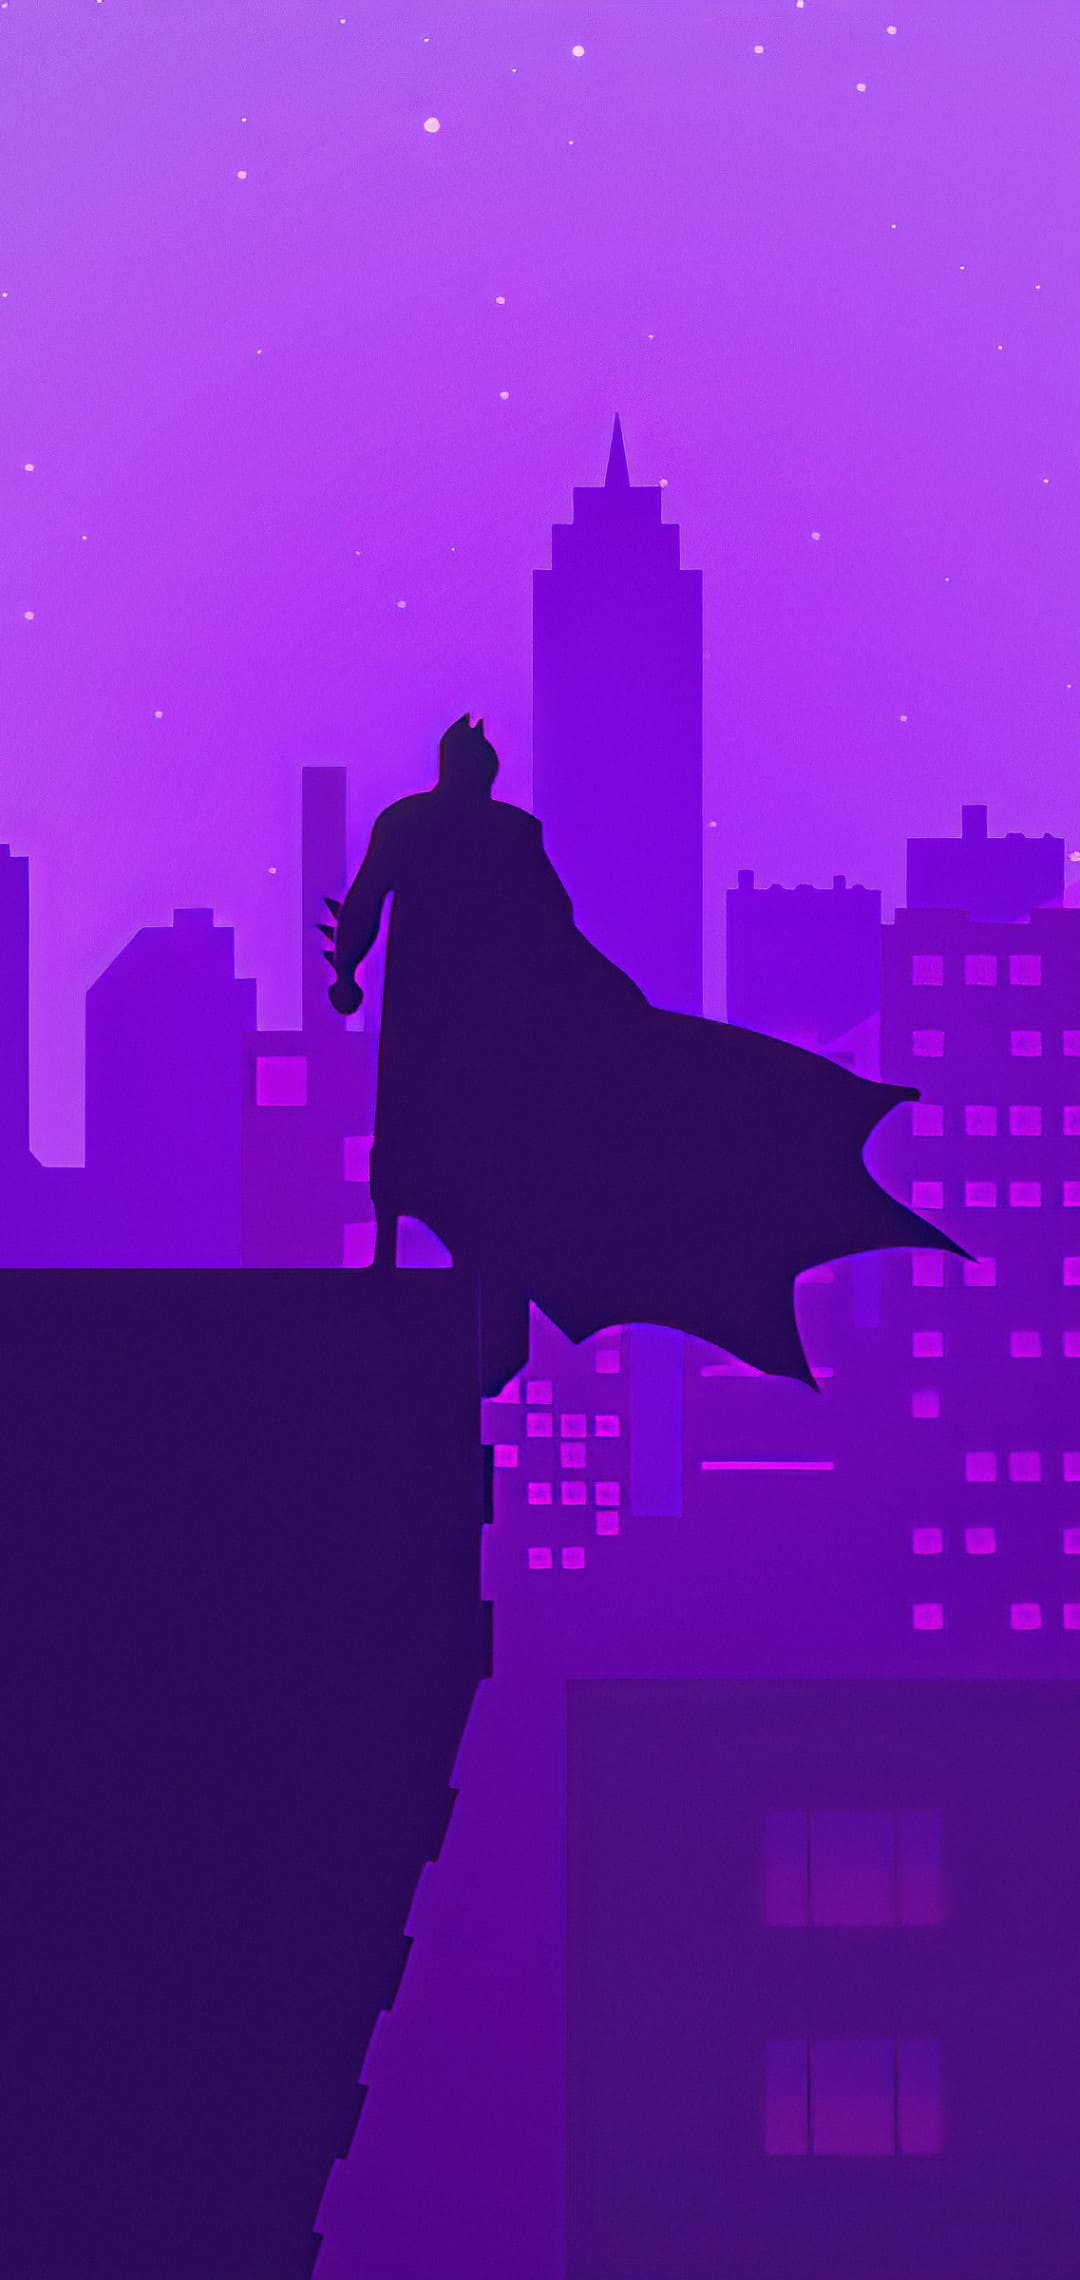 Download Free HD Batman Background Images